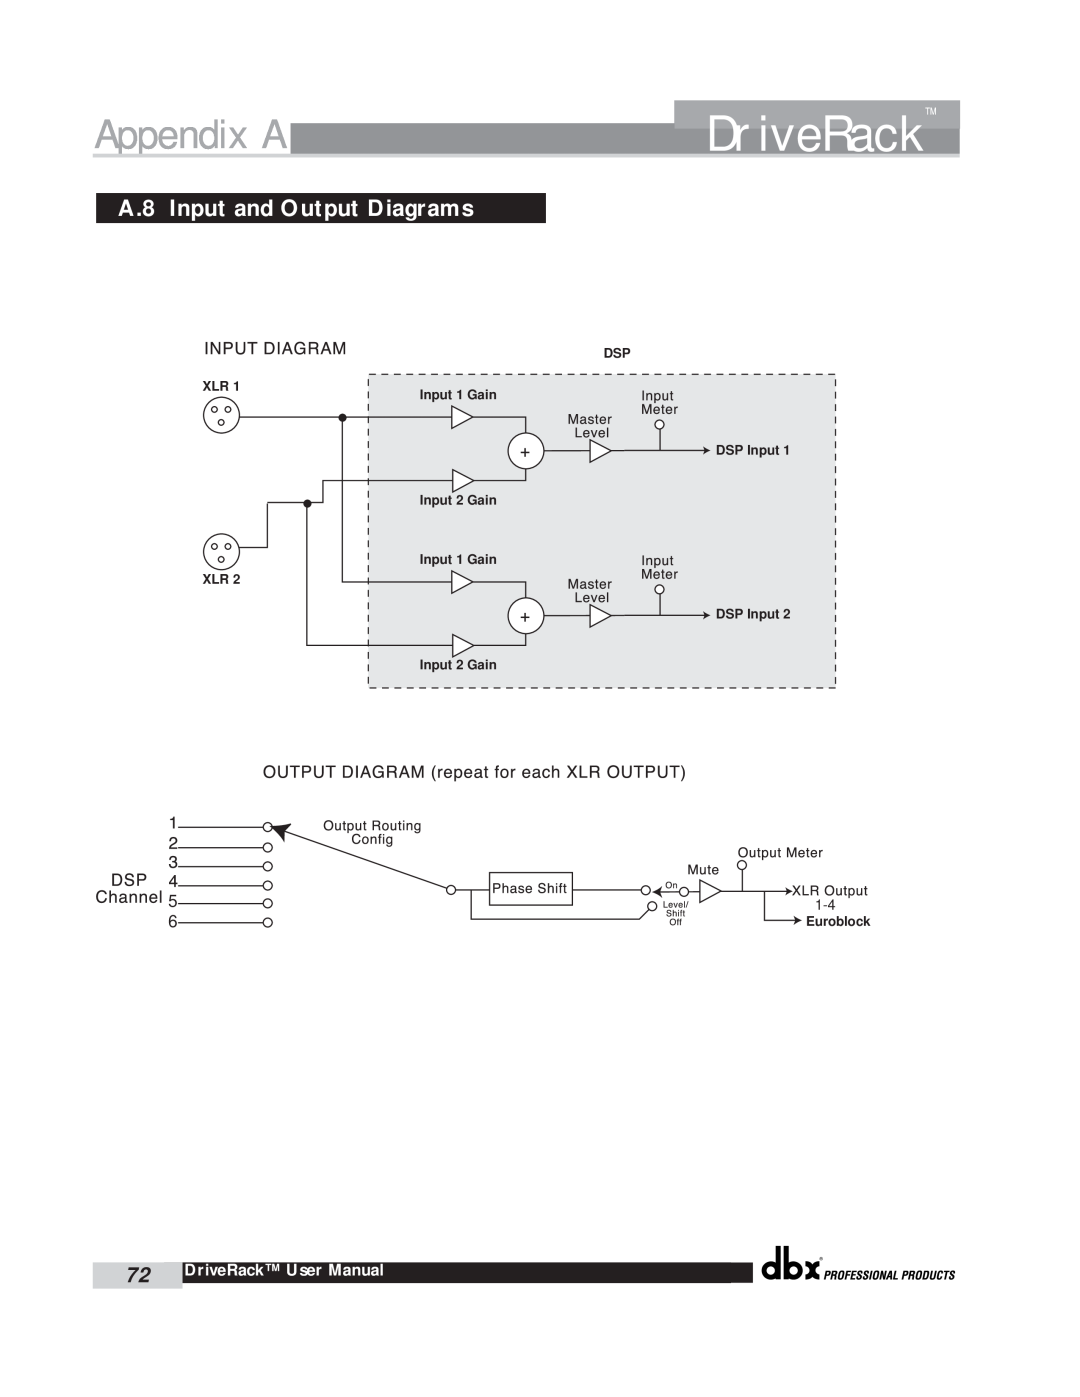 dbx Pro 260 A.8 Input and Output Diagrams, DriveRack, Appendix A, Xlr Xlr, DSP Input 1 Gain DSP Input Input 2 Gain 